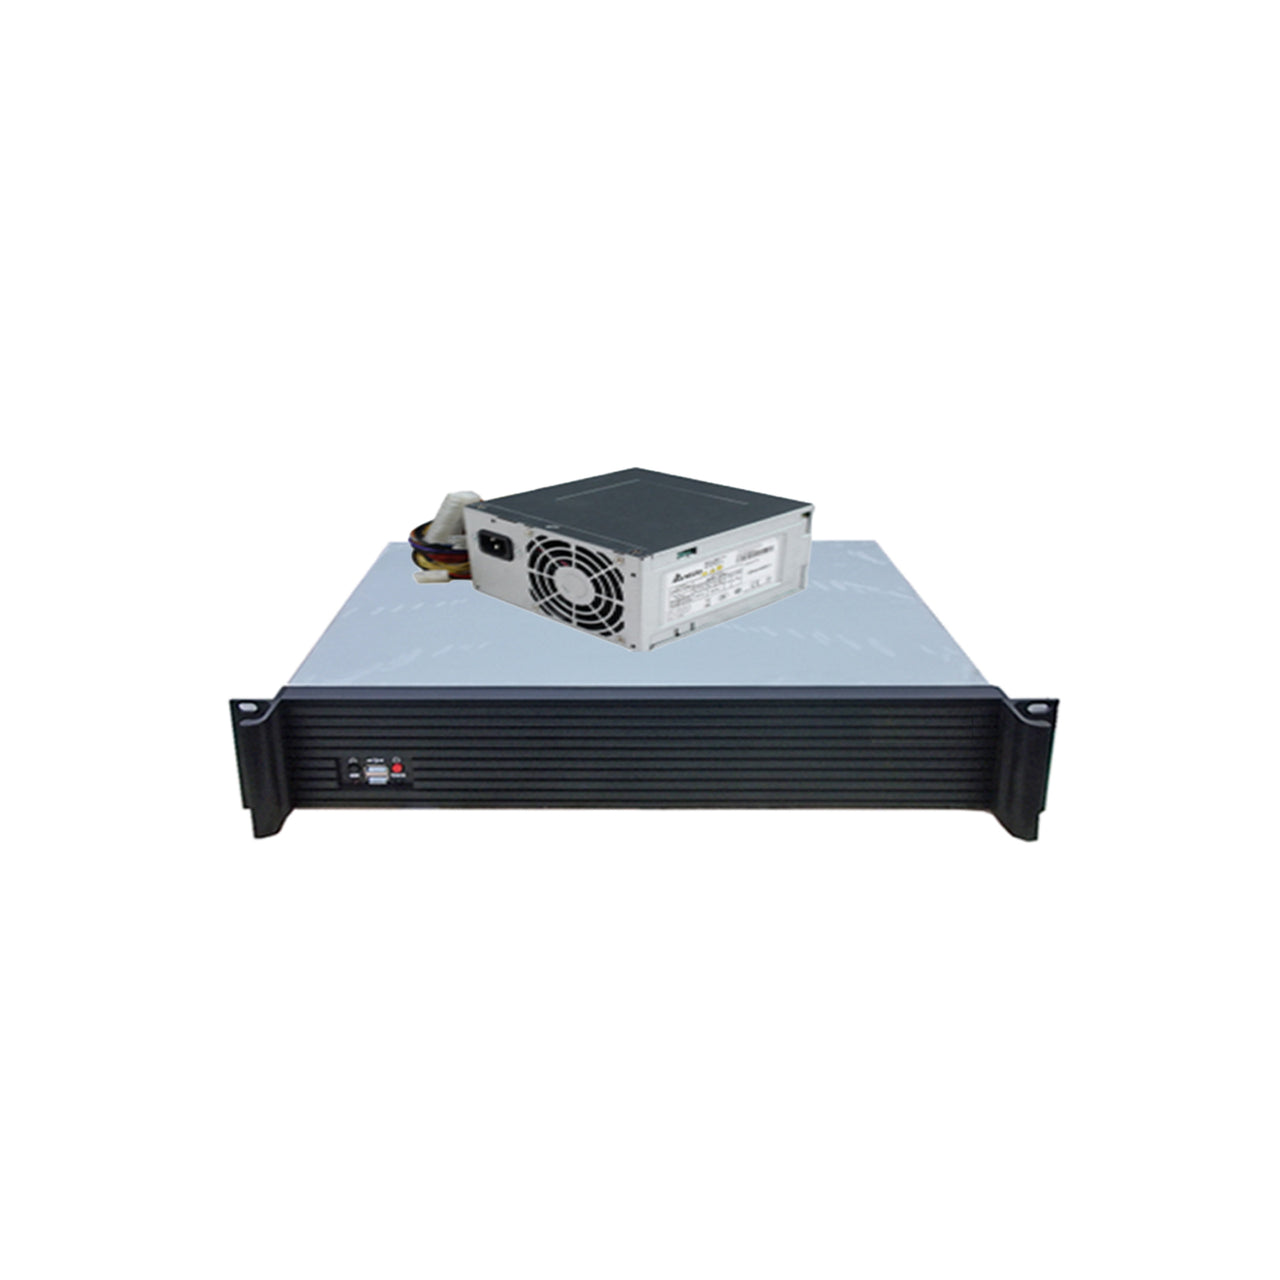 JideTech X86 Super NVR, Centralized Storage Management Device Support 36pcs Cameras input (NVSS8104-36)